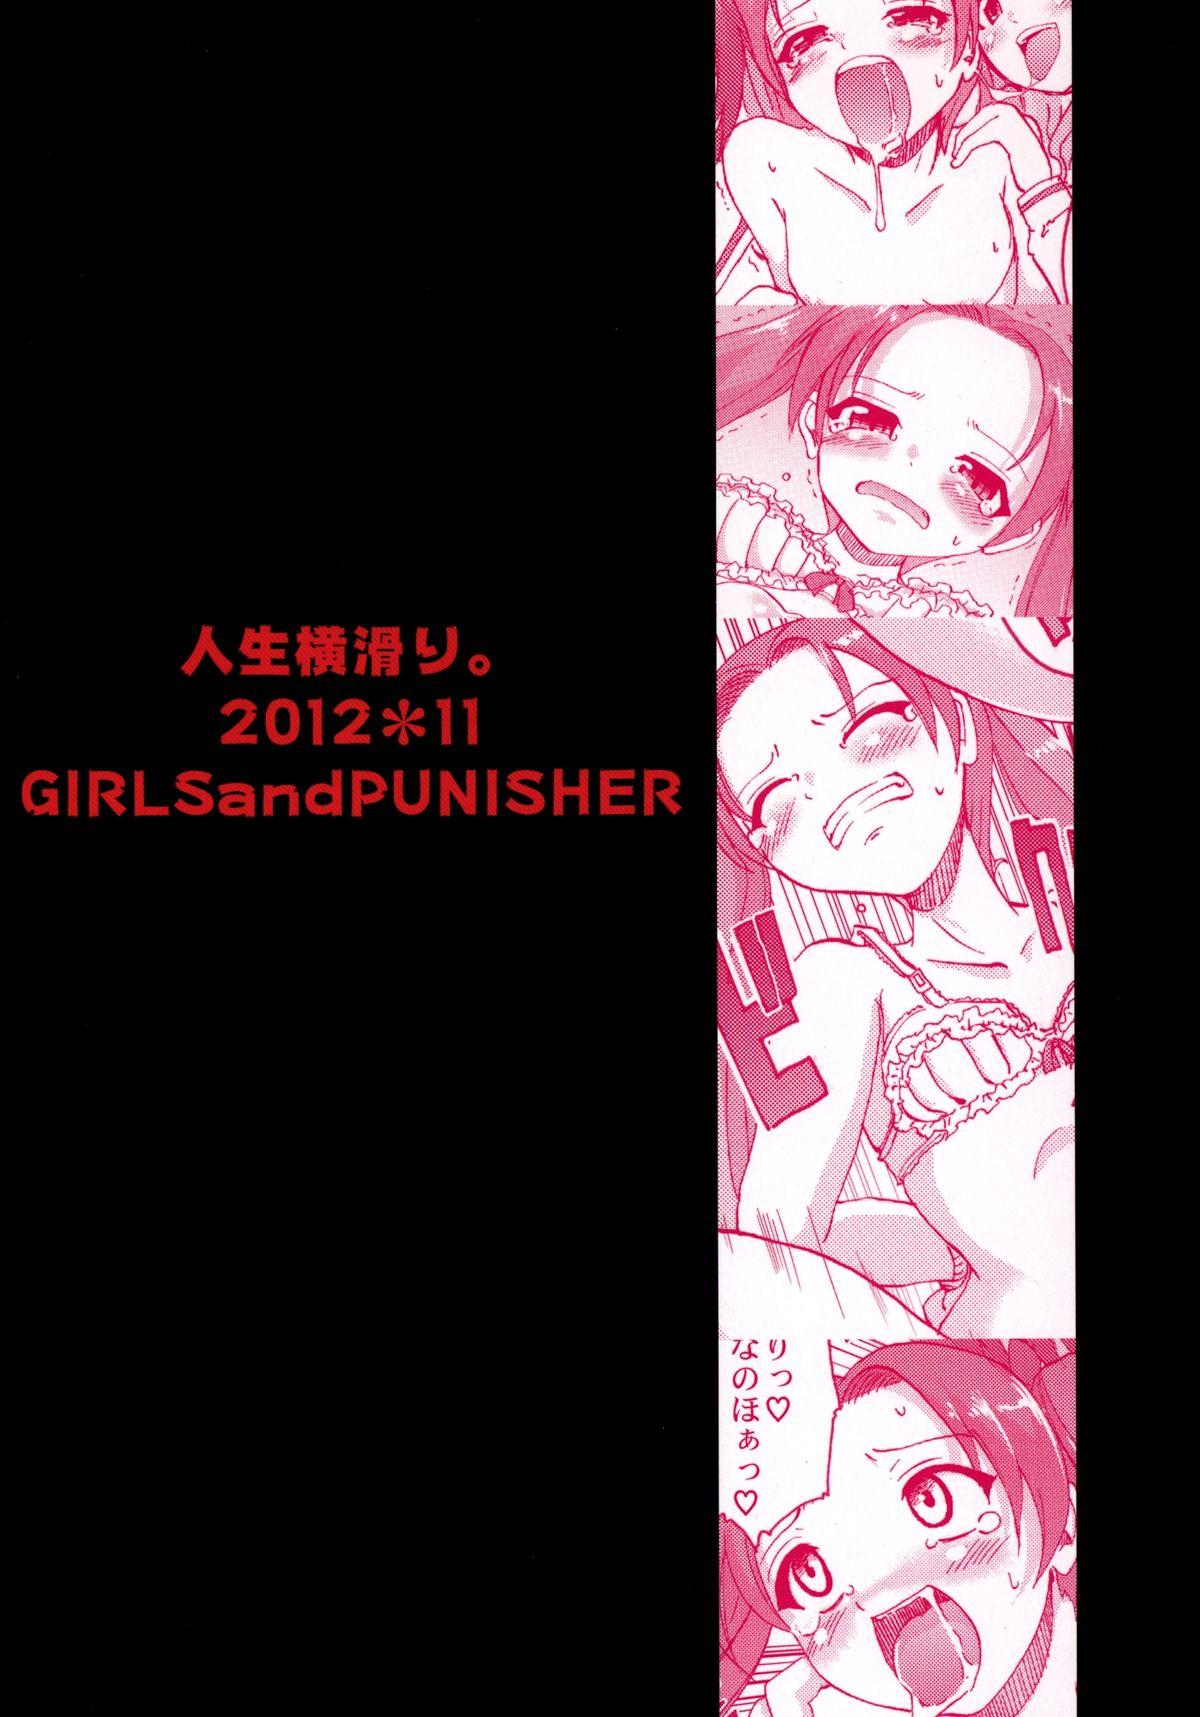 Girls & Punisher 27